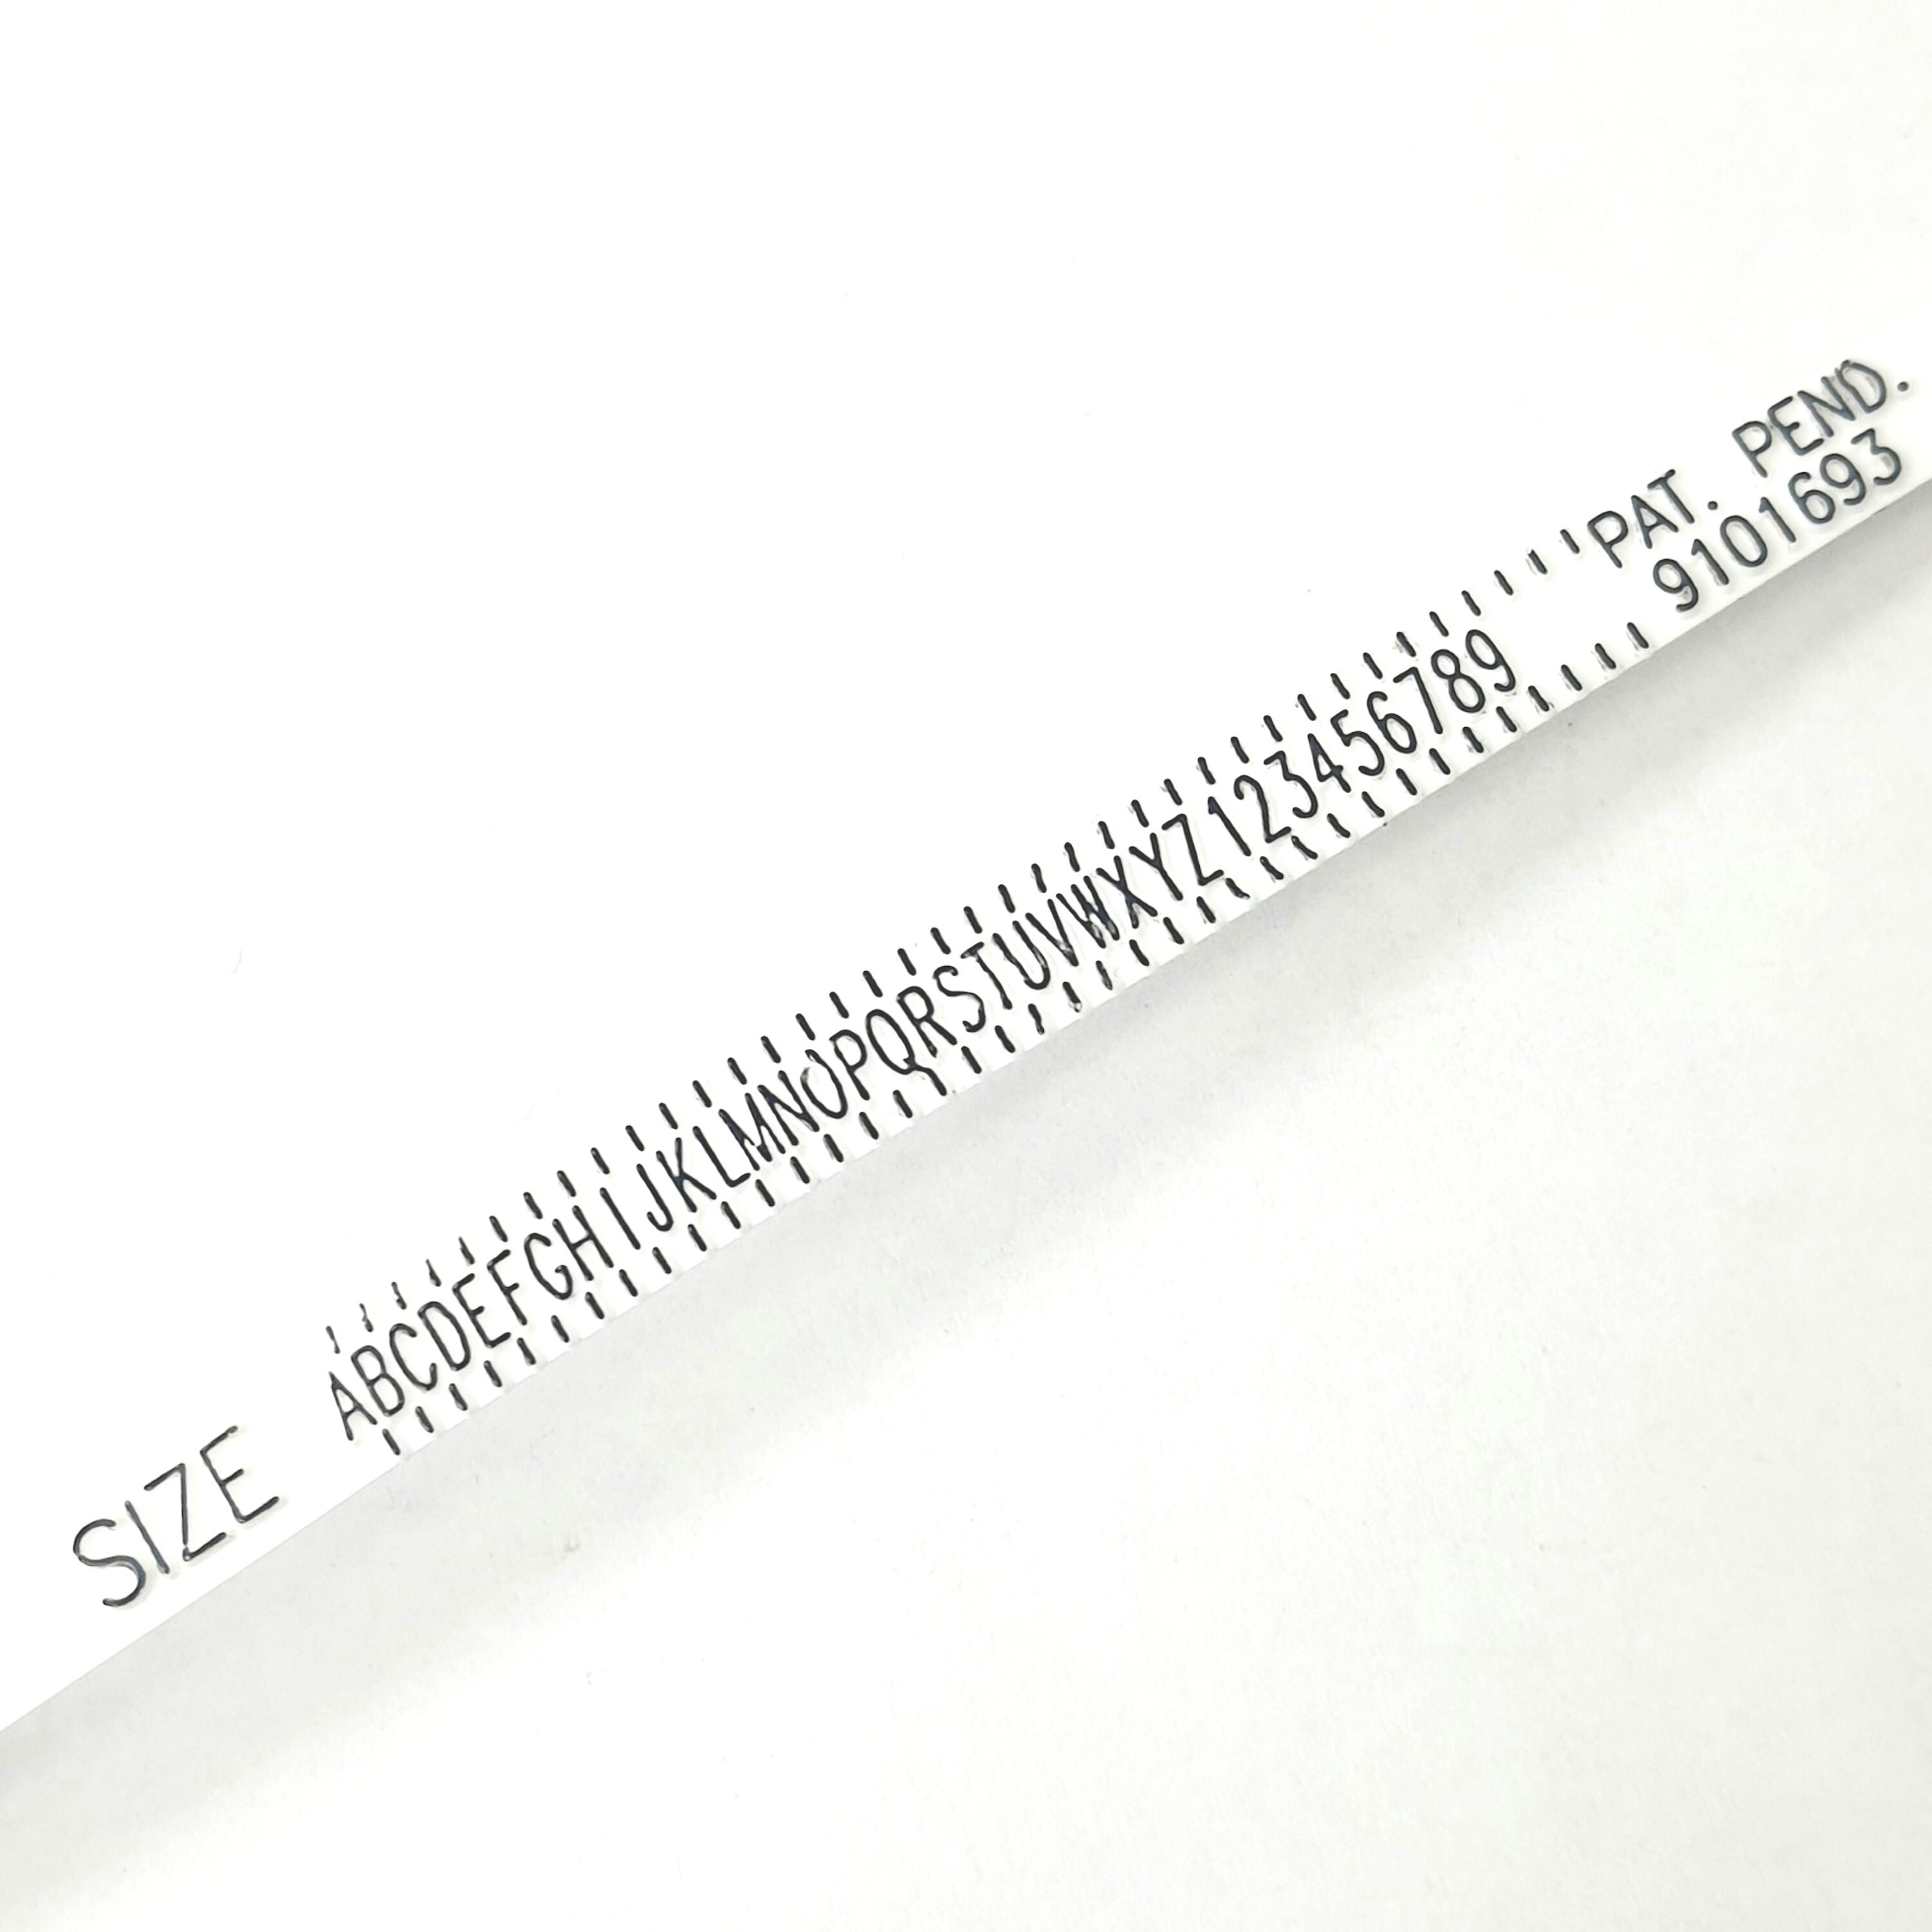 Free Postage UK Ring finger sizer measure gauge all British UK sizes A Z+1 